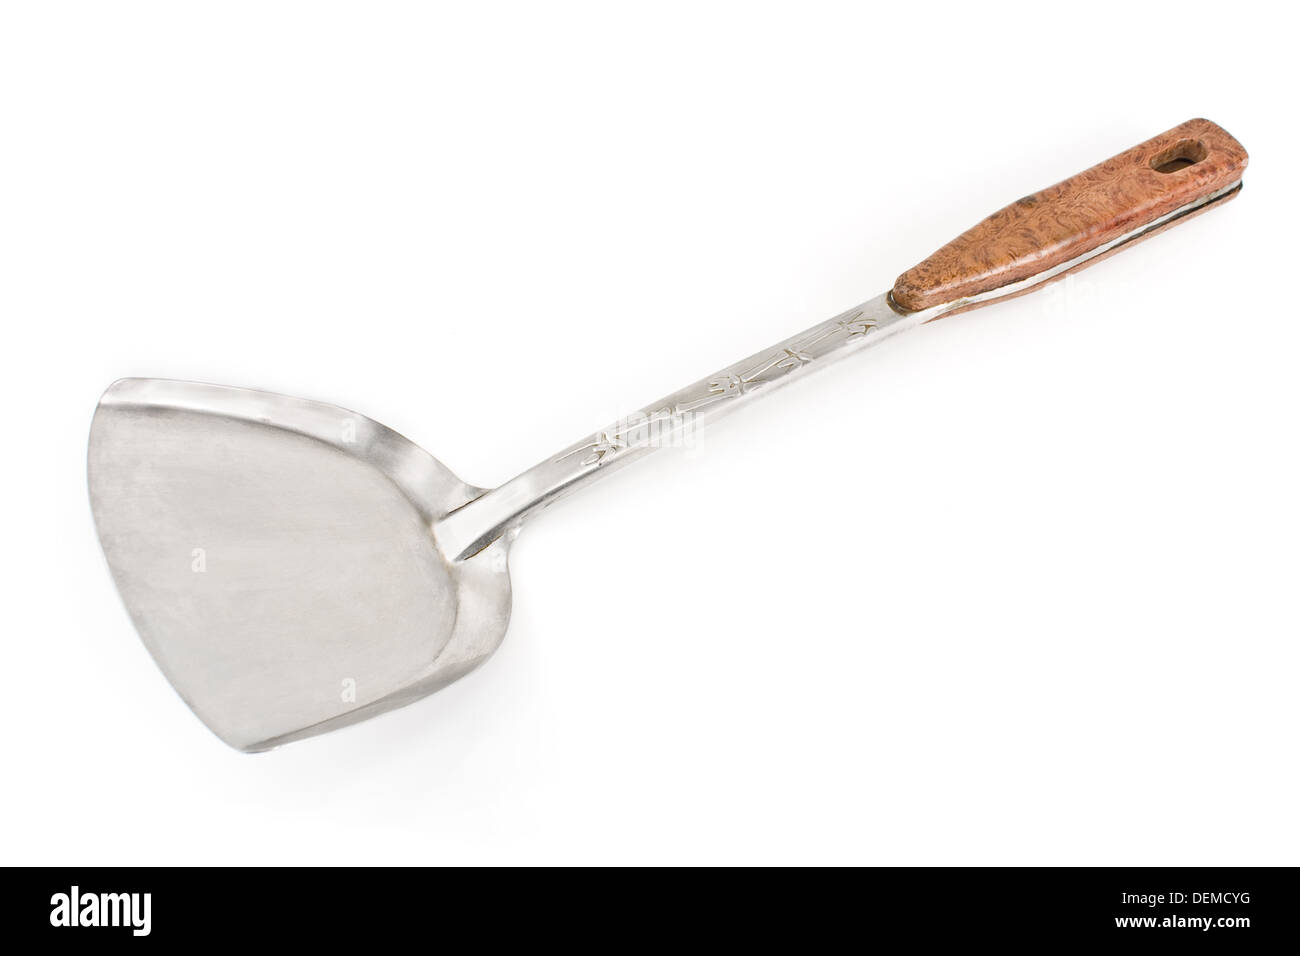 Kitchen serving spoon utensil isolated on white Stock Photo